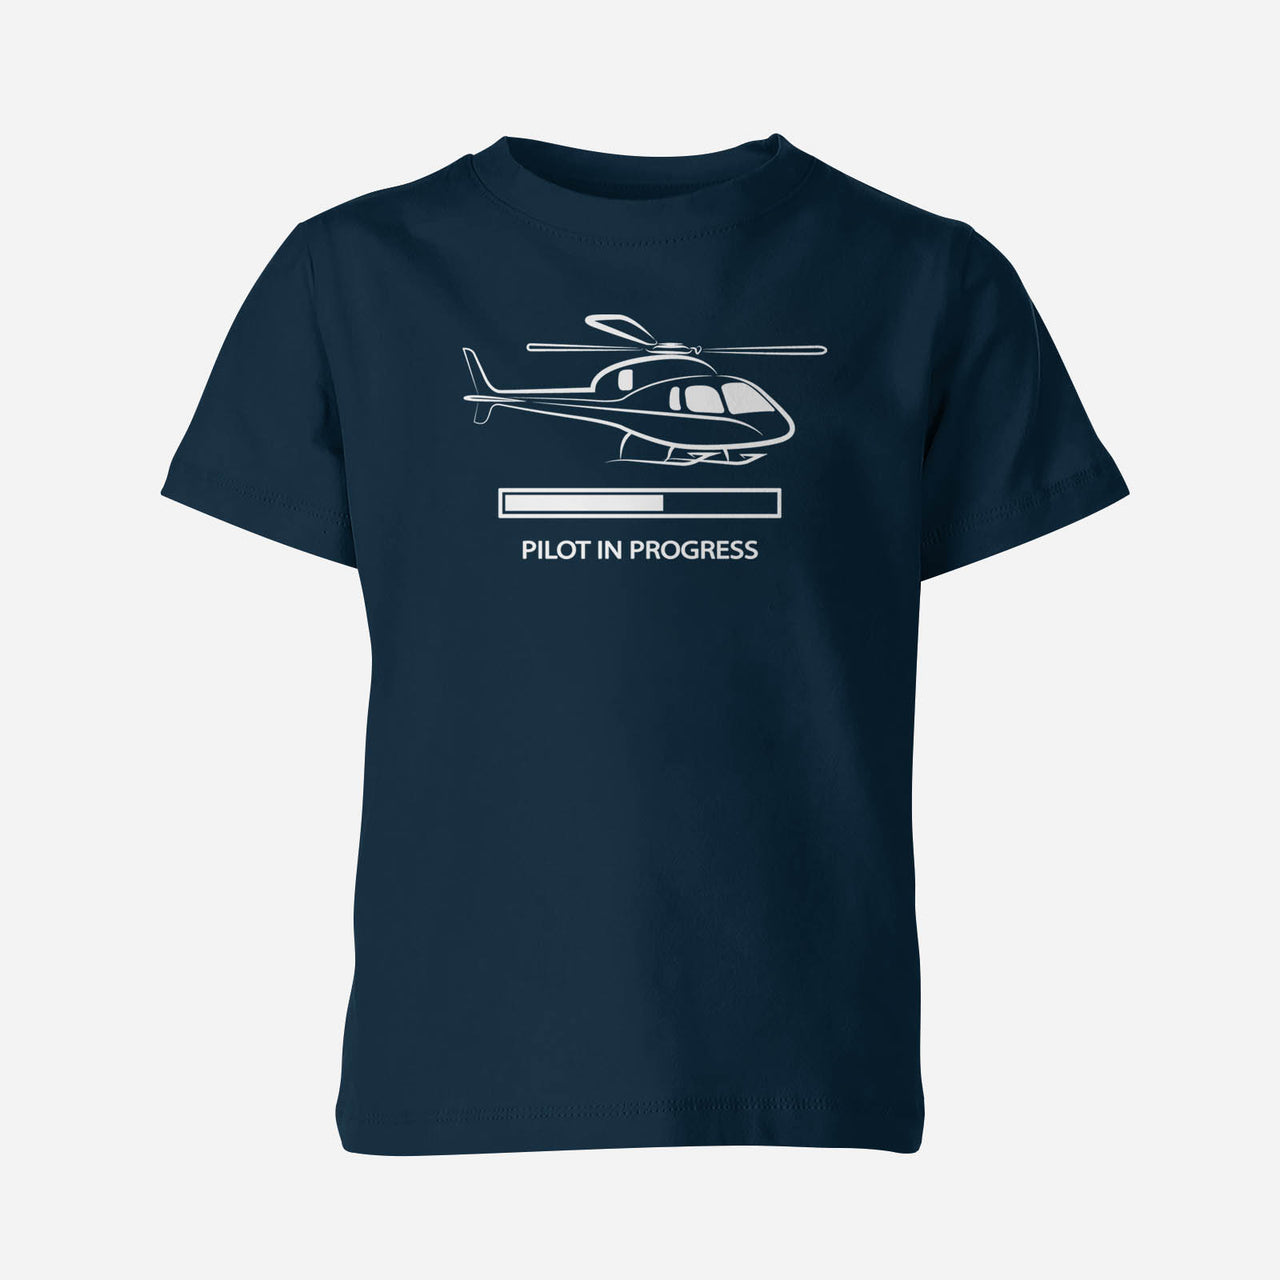 Pilot In Progress (Helicopter) Designed Children T-Shirts